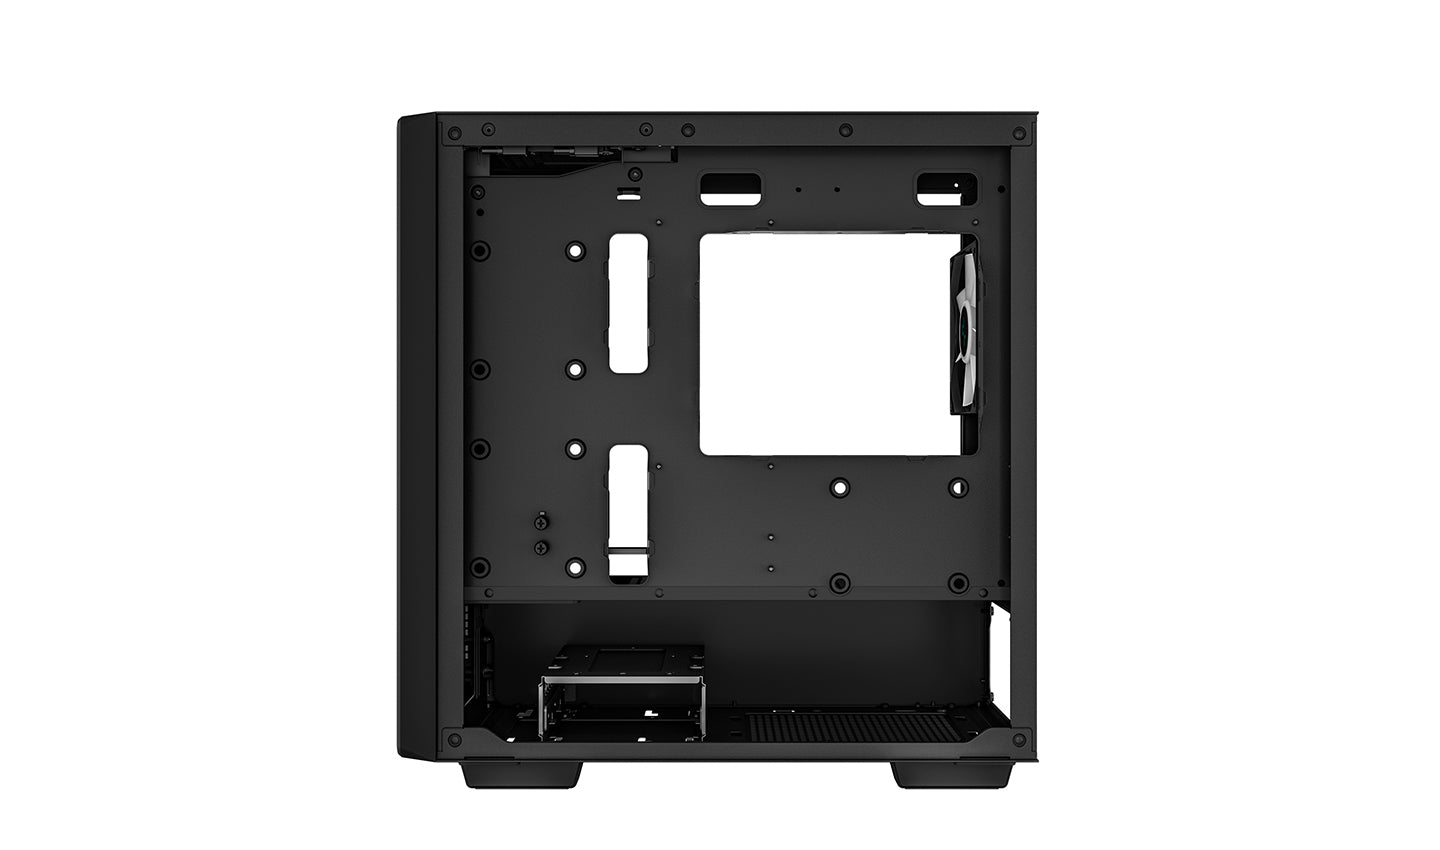 DeepCool CC360 A-RGB Micro-ATX Case, Black